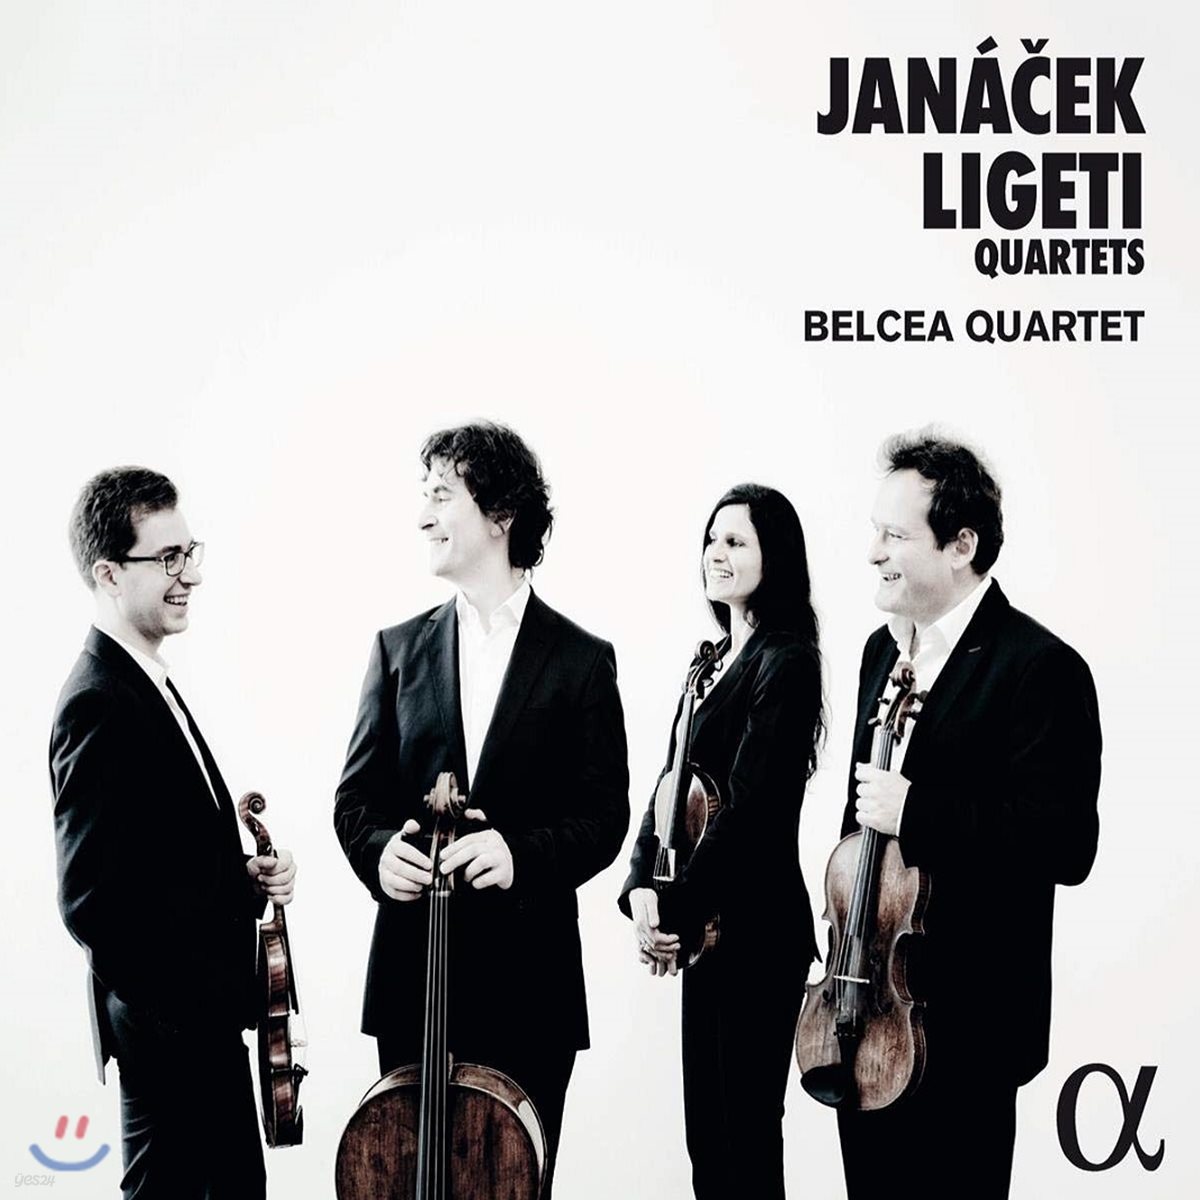 Belcea Quartet 야나체크 / 죄르지 리게티: 현악 사중주 (Janacek / Gyorgy Ligeti: String Quartets)